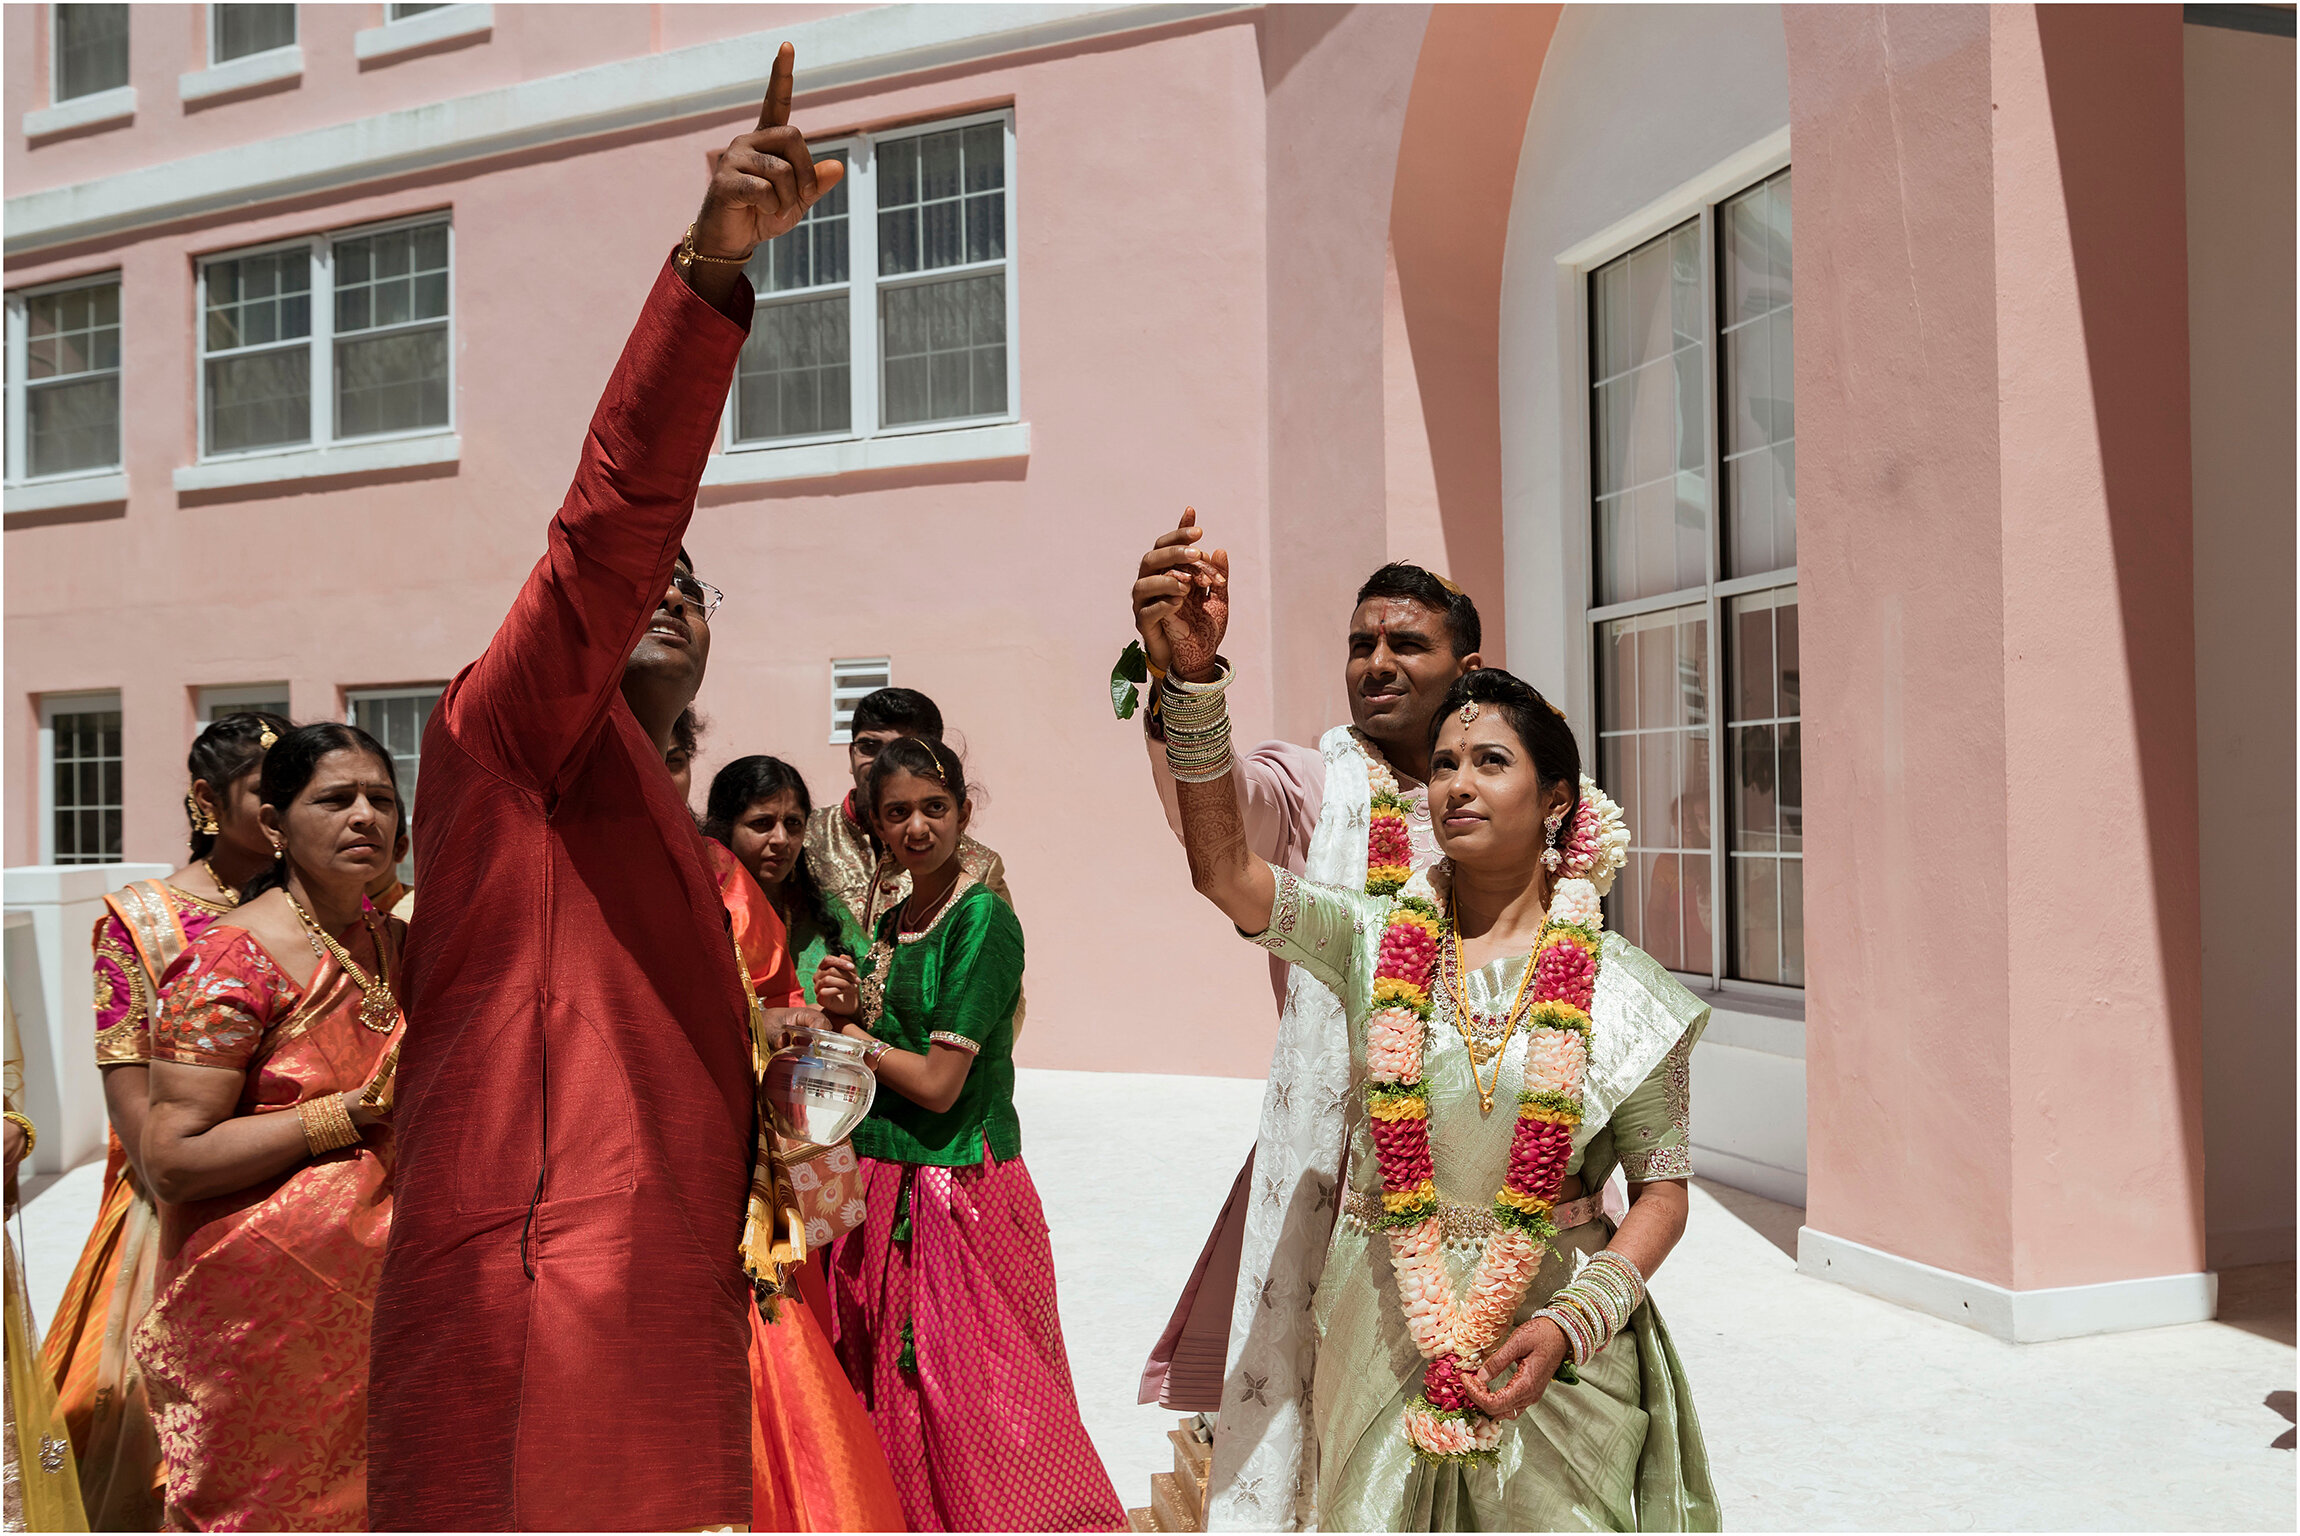 ©FianderFoto_Hindu Wedding_Bermuda_086.jpg